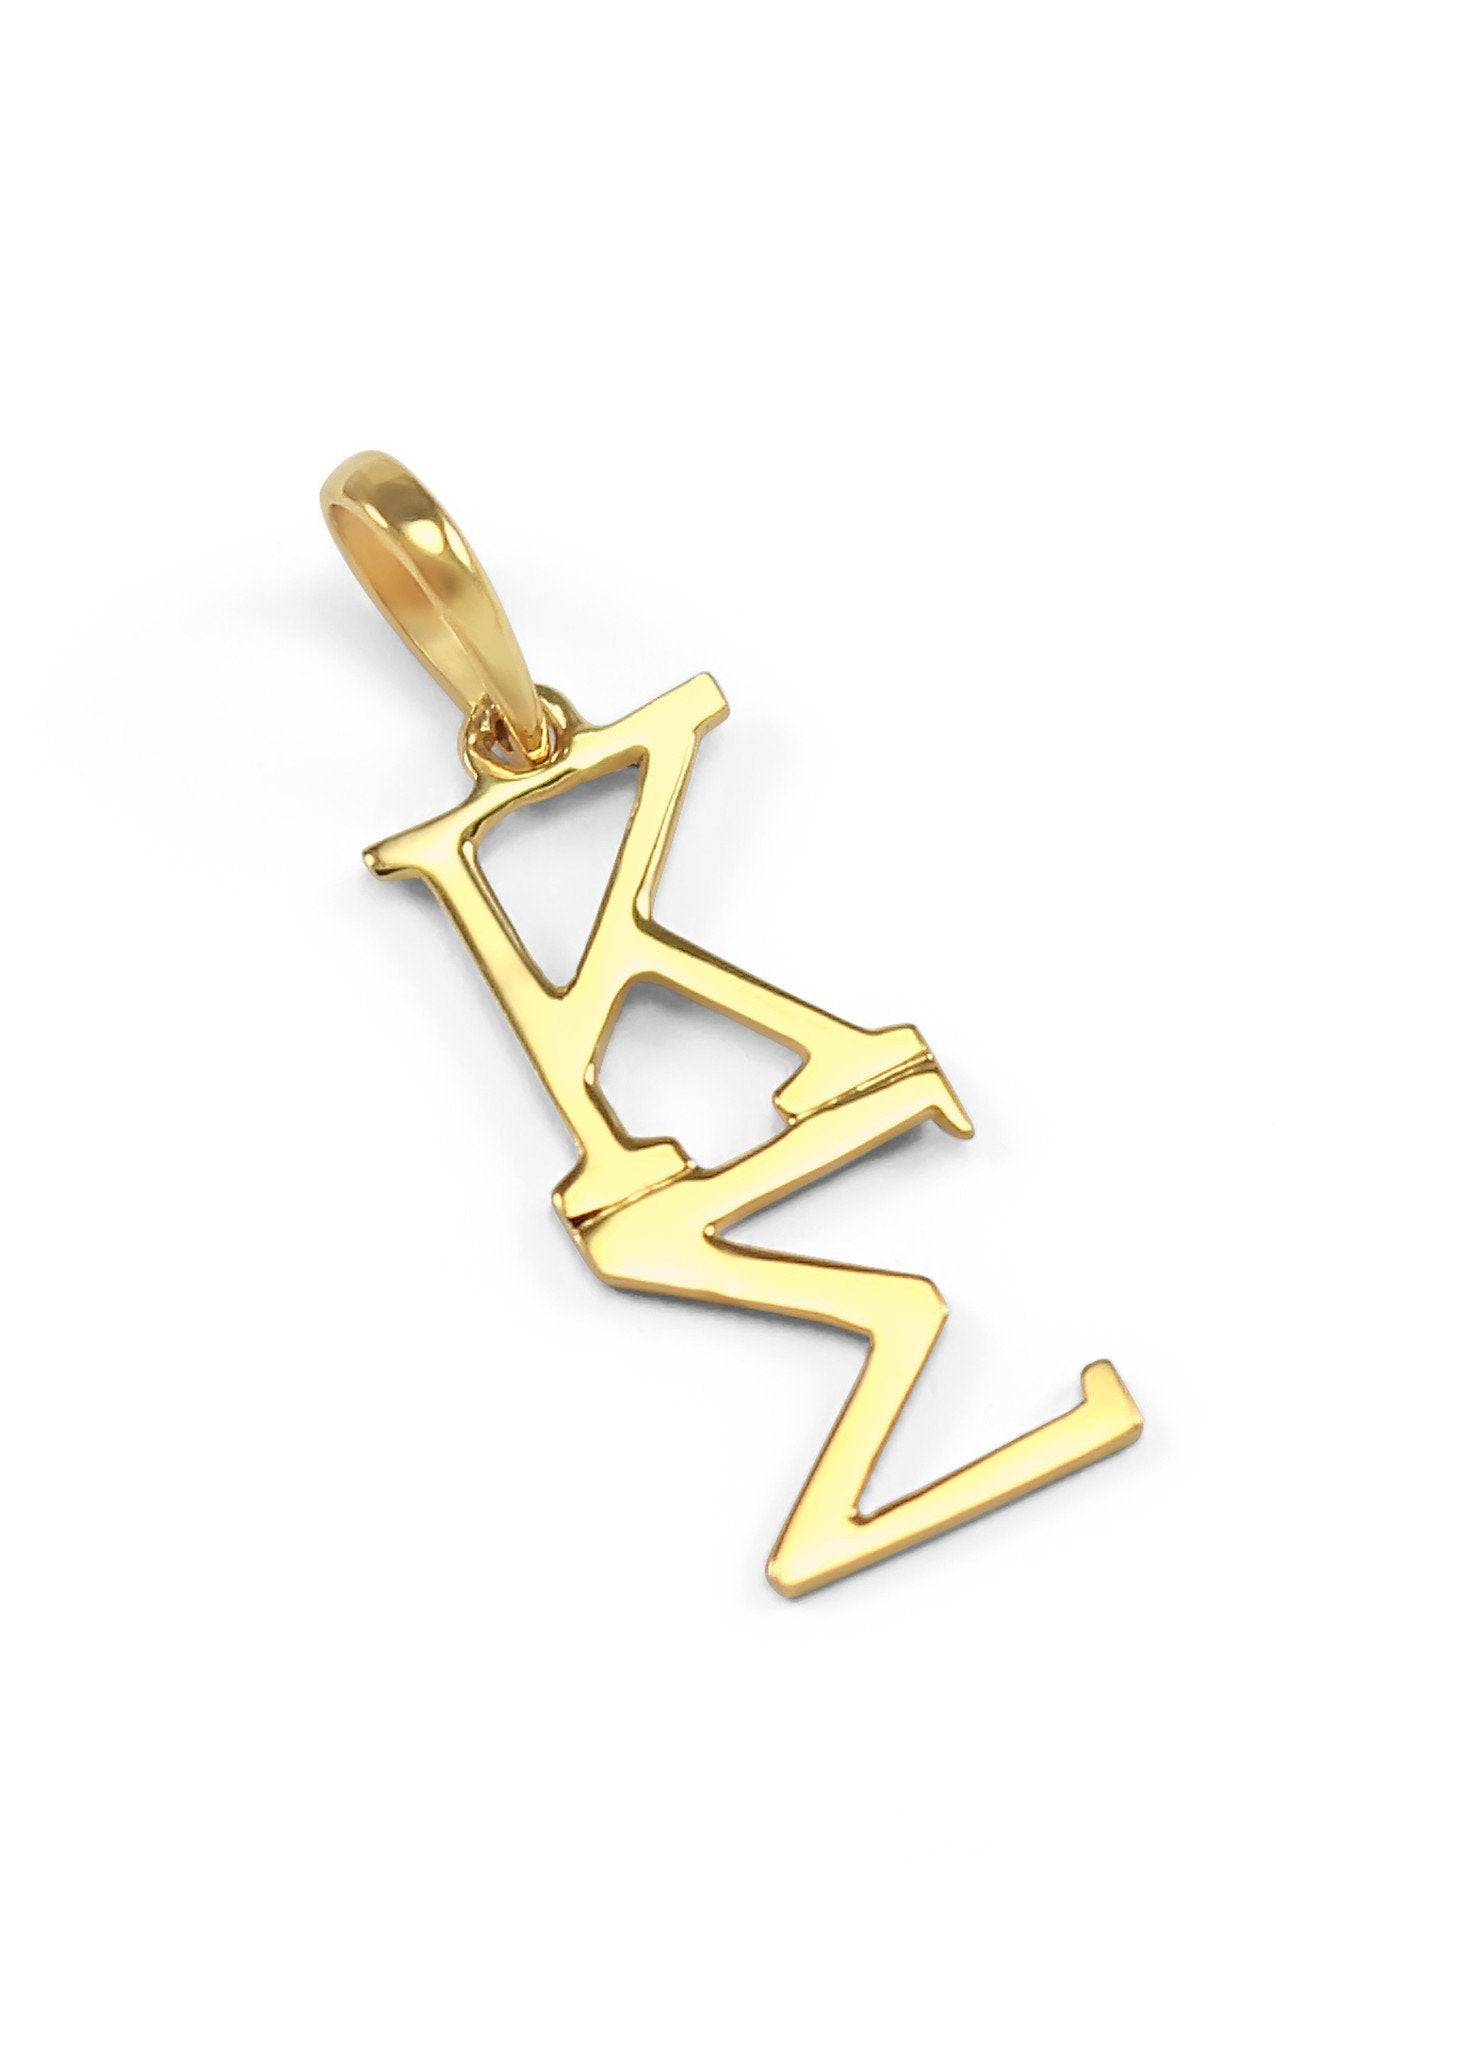 14k Gold Kappa Lavalier | Kappa Sigma Jewelry For Sale - The Collegiate Standard